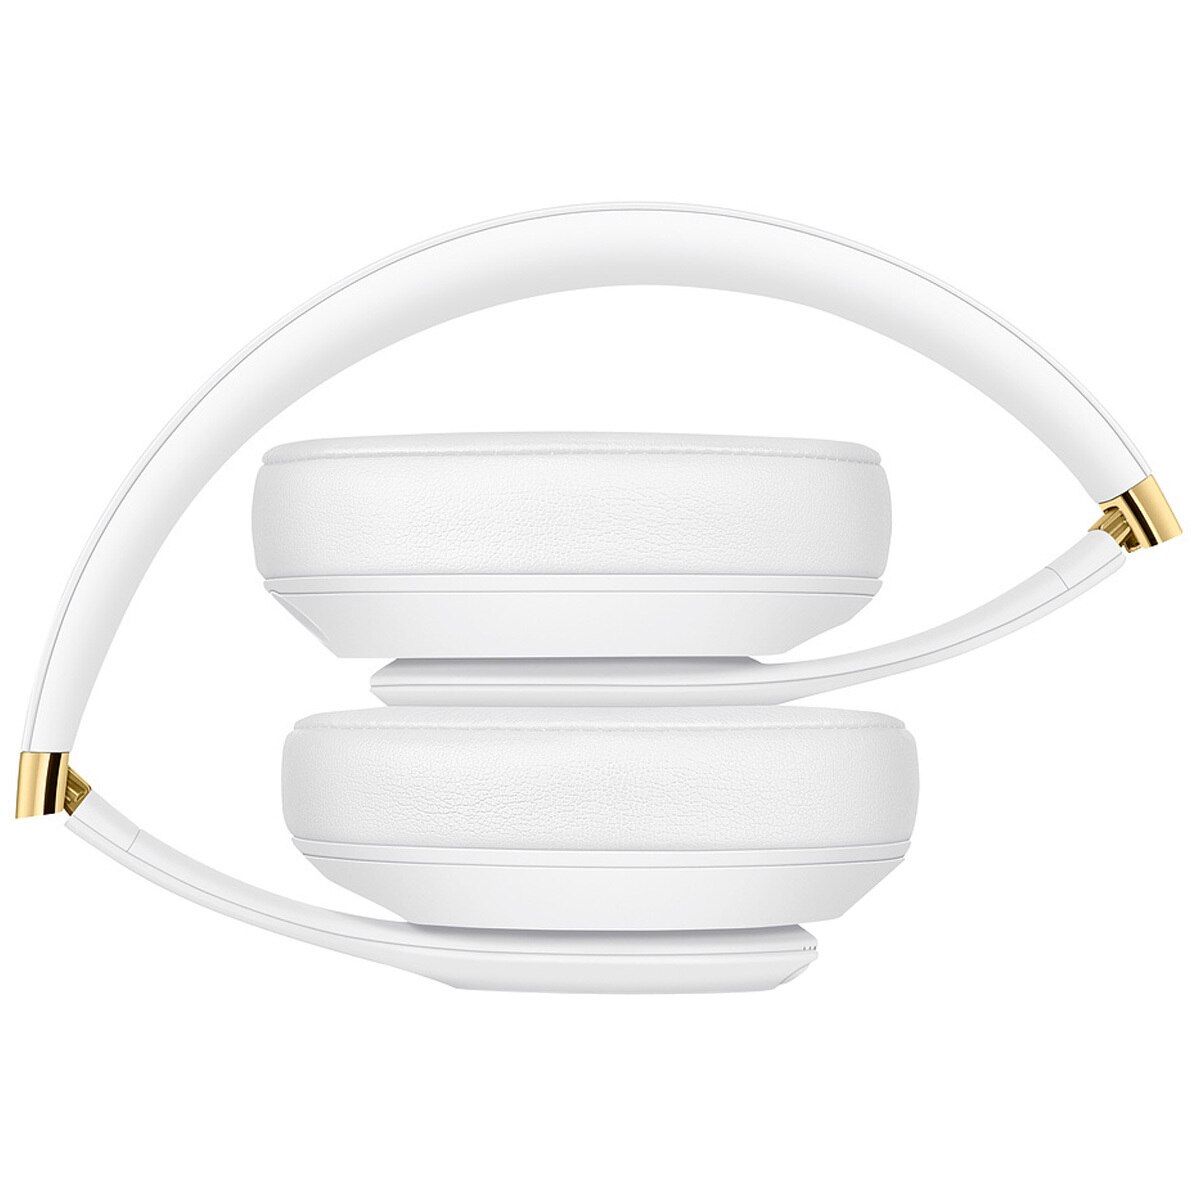 Beats Studio3 Wireless Headphones - White MQ572PA/A